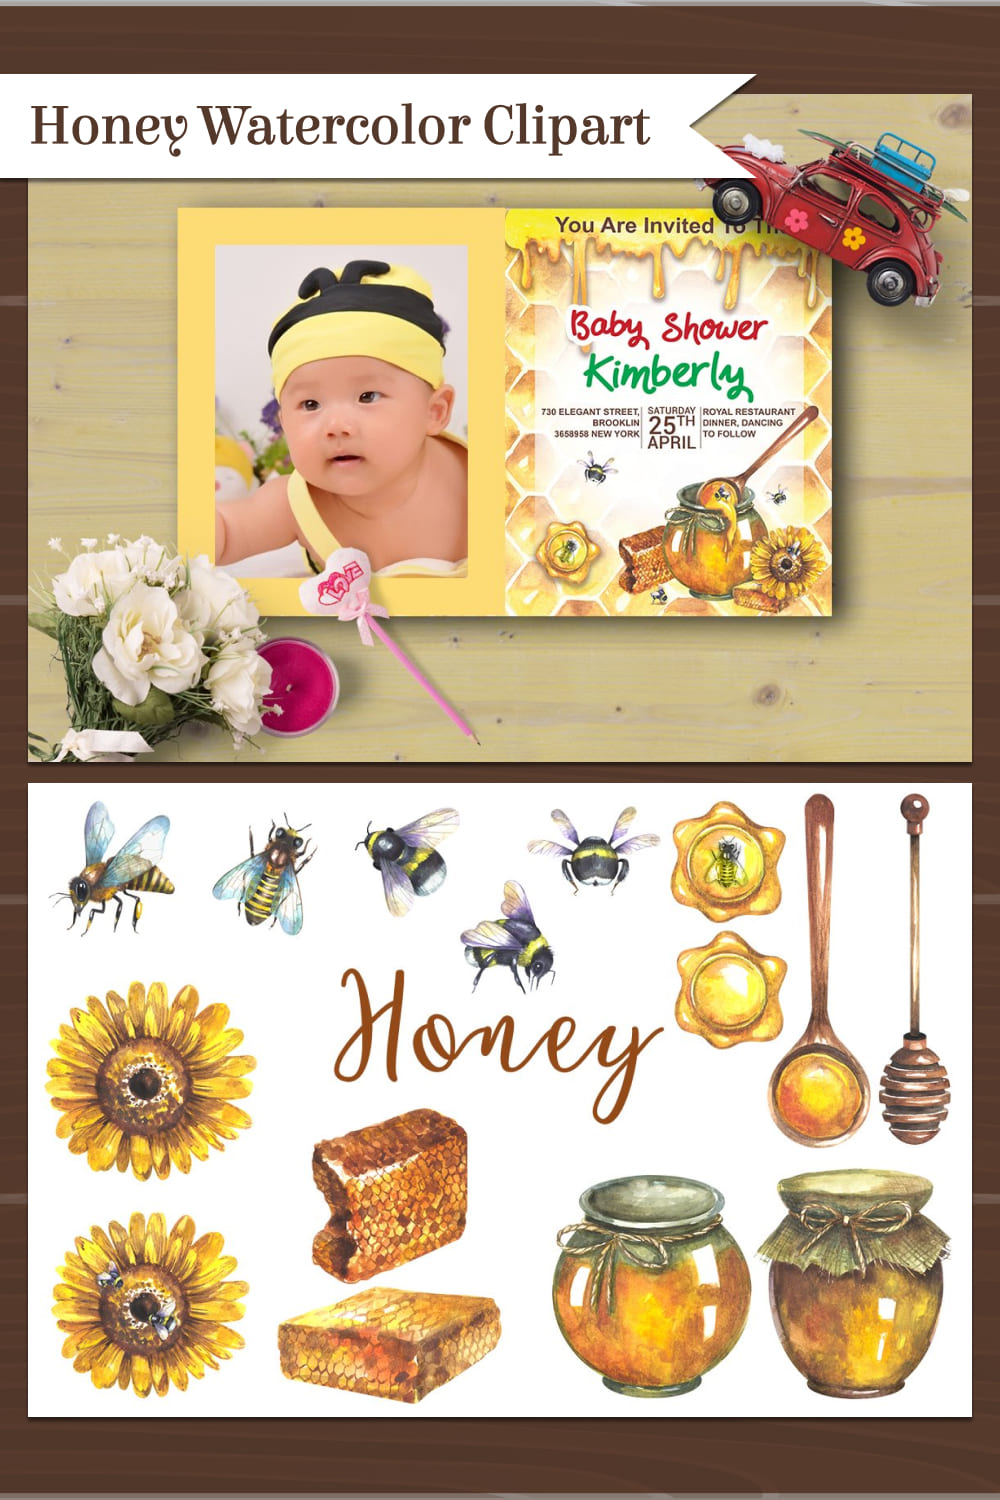 Honey watercolor clipart - pinterest image preview.